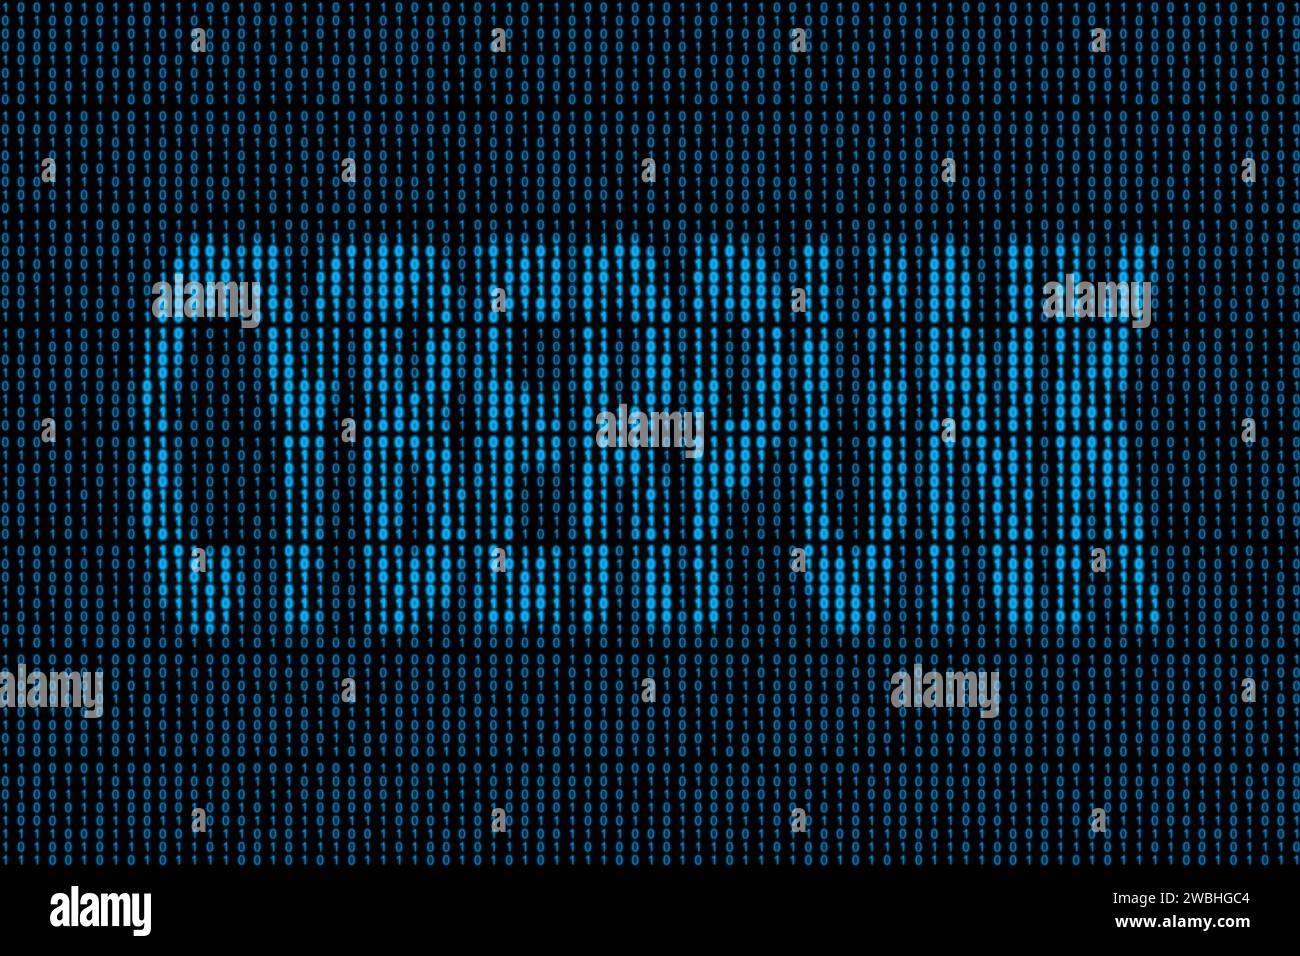 Subliminal message 'Cyberpunk' hidden in binary code. Stock Photo